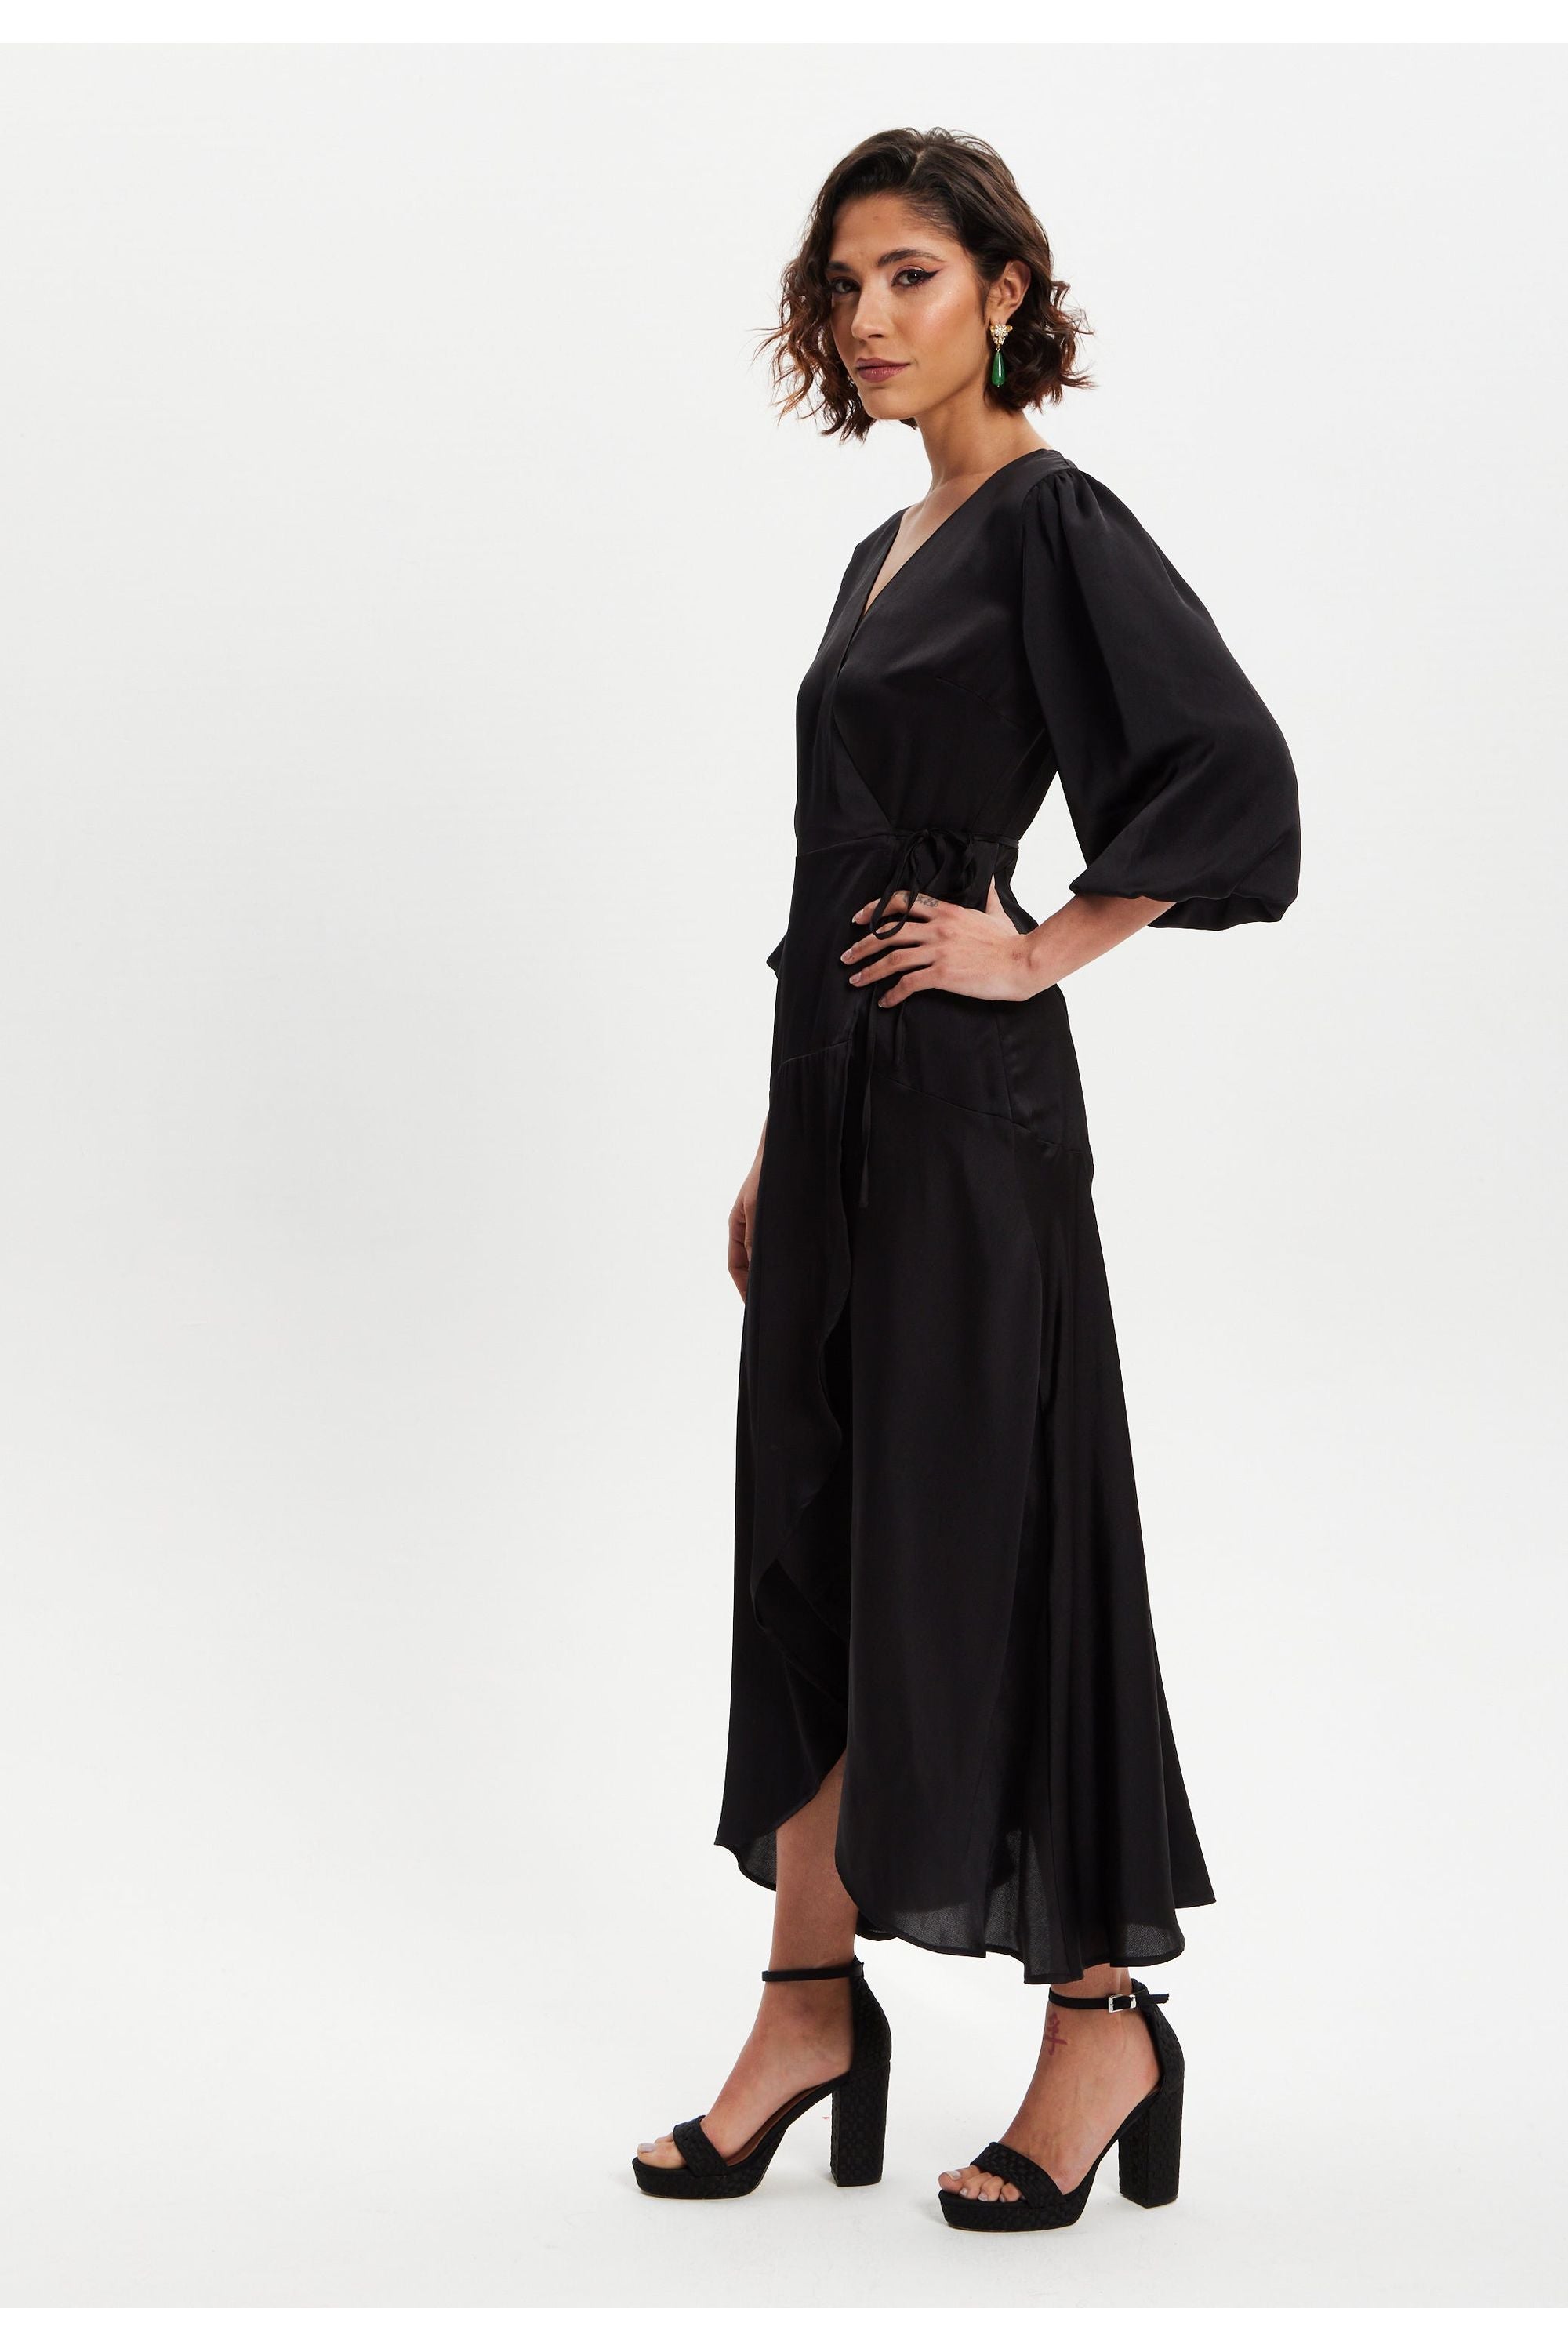 Black Midi Wrap Dress With Short Puff Sleeves LIQ20-128Black